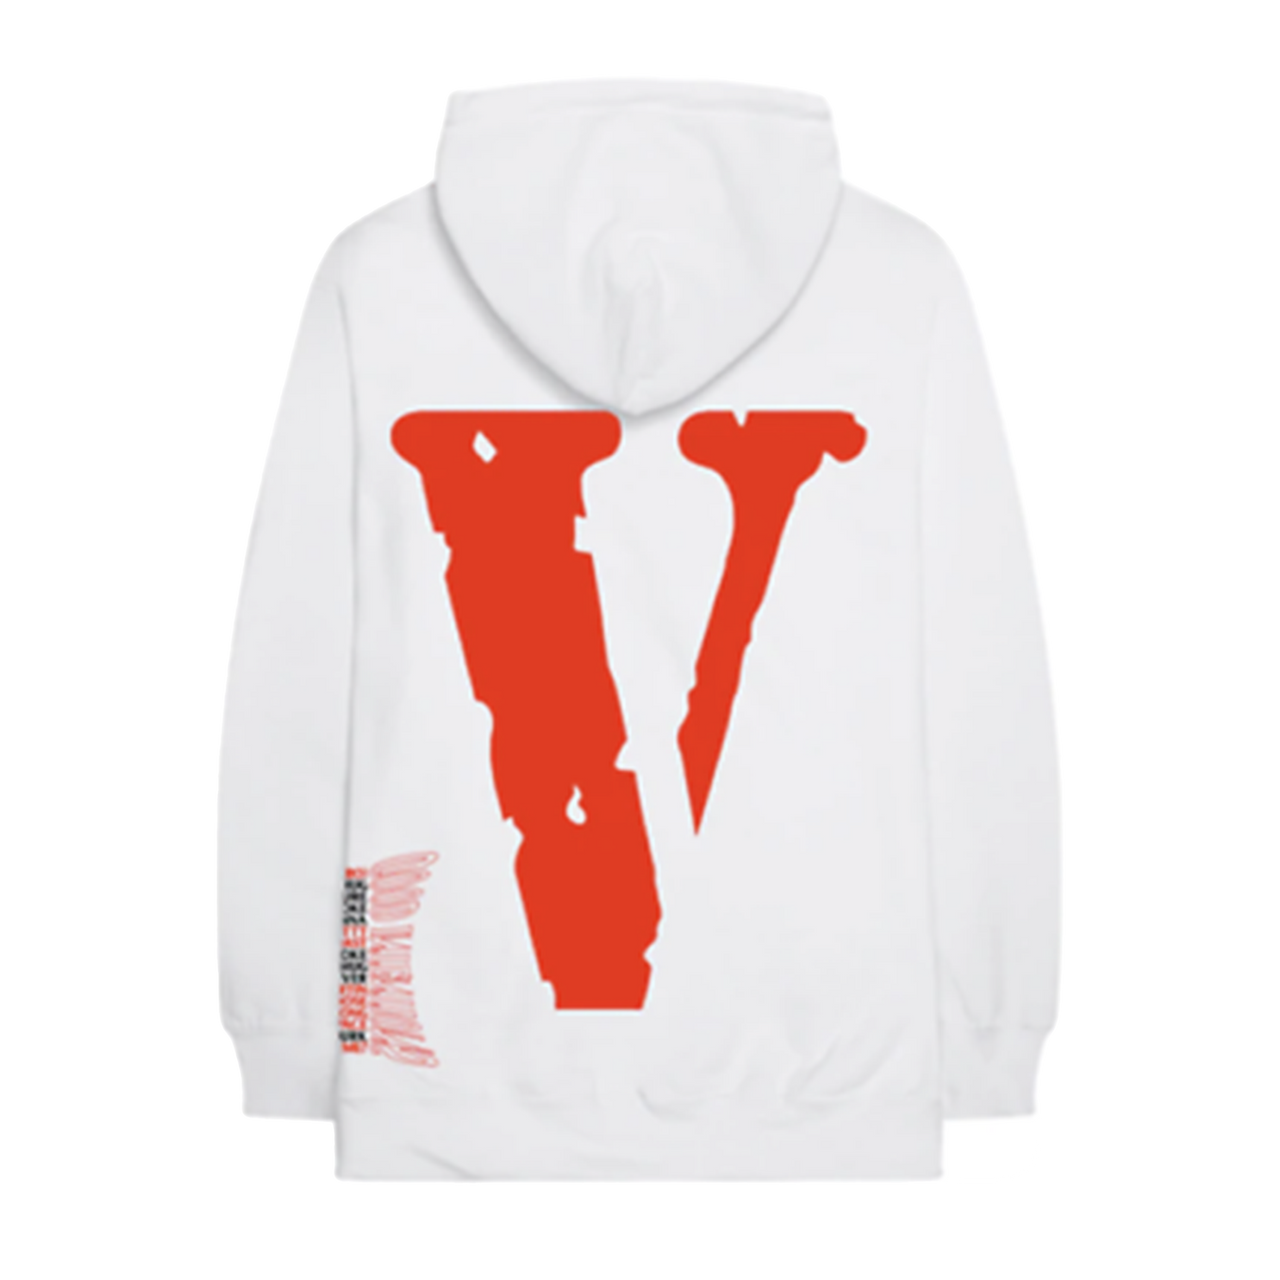 Vlone x Nav Bad Habits Good Intentions Sweatshirt White